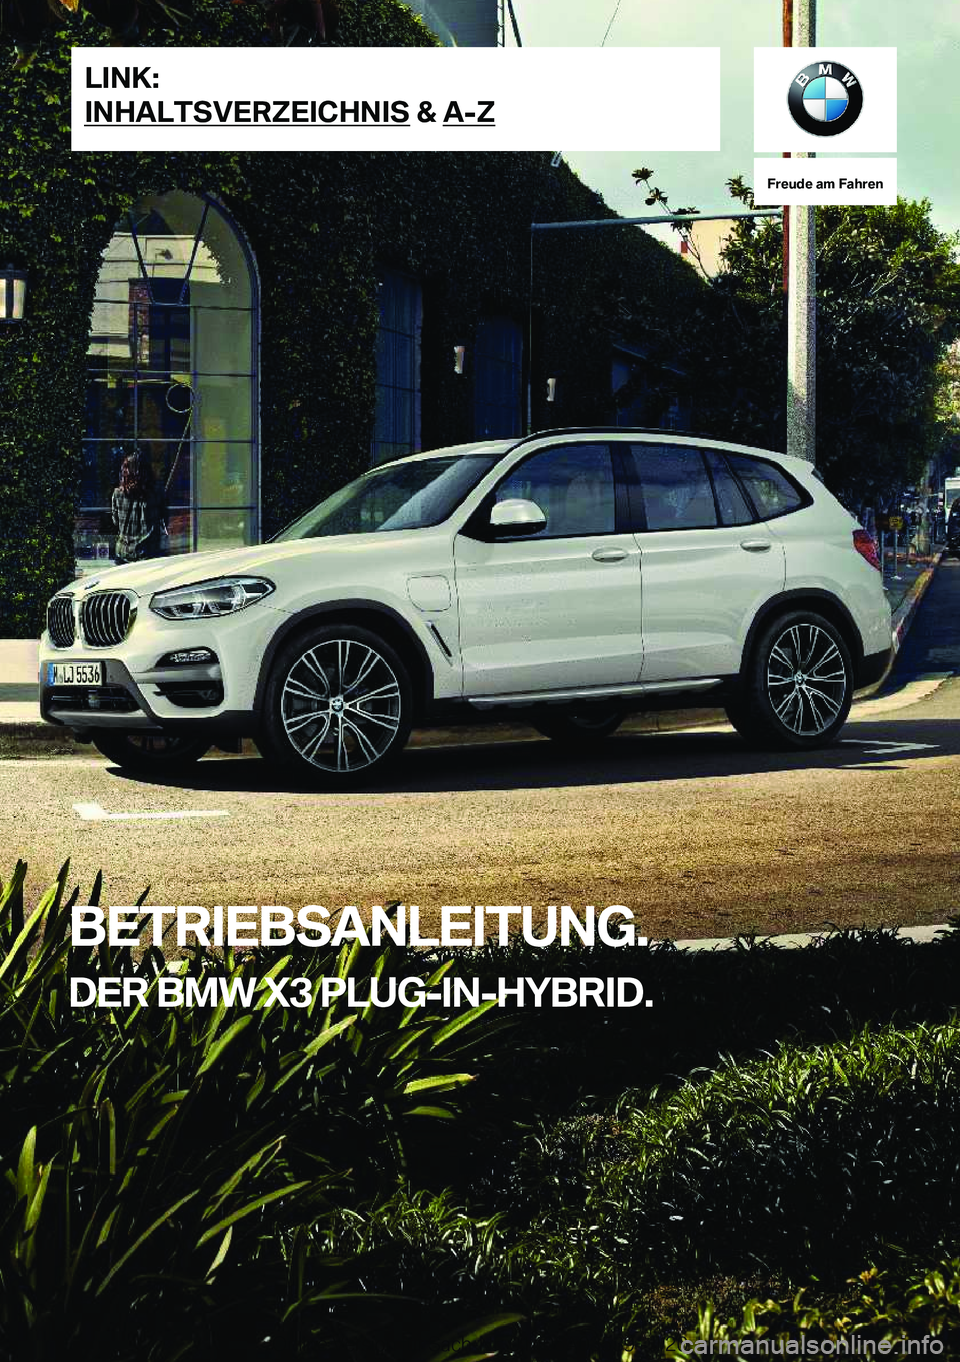 BMW X3 PLUG IN HYBRID 2020  Betriebsanleitungen (in German) �F�r�e�u�d�e��a�m��F�a�h�r�e�n
�B�E�T�R�I�E�B�S�A�N�L�E�I�T�U�N�G�.�D�E�R��B�M�W��X�3��P�L�U�G�-�I�N�-�H�Y�B�R�I�D�.�L�I�N�K�:
�I�N�H�A�L�T�S�V�E�R�Z�E�I�C�H�N�I�S��&��A�-�Z�O�n�l�i�n�e��V�e�r